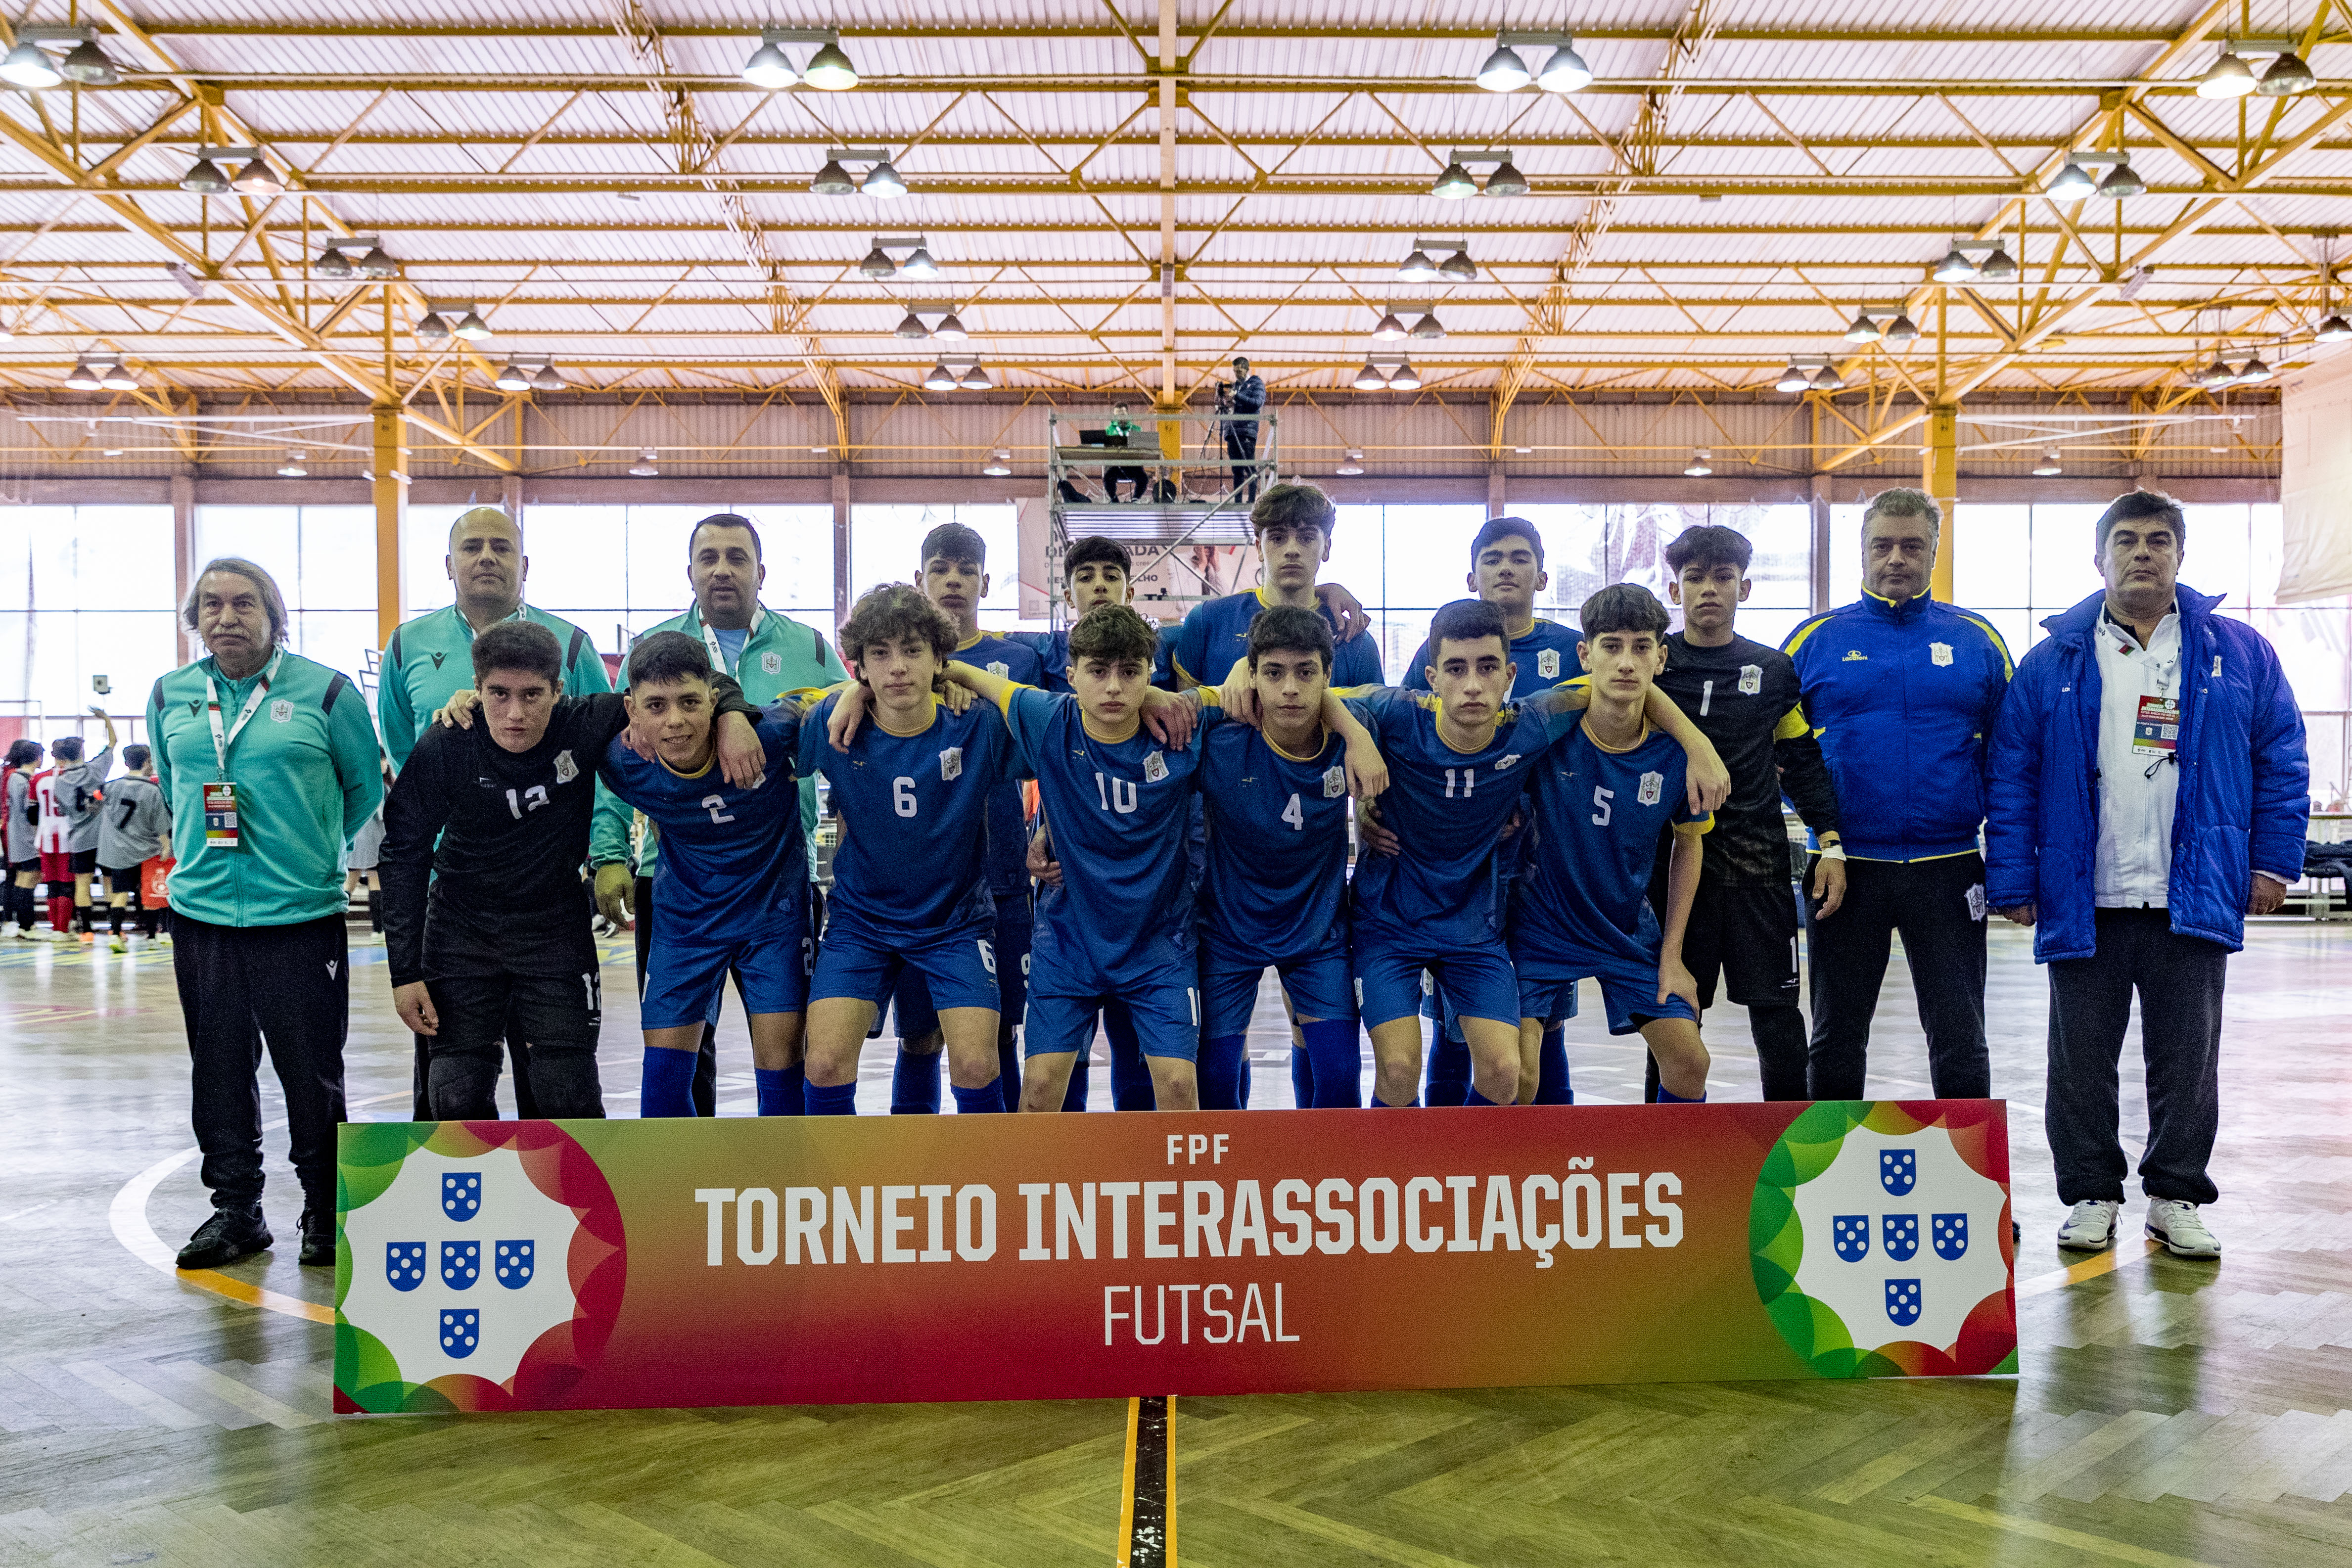 Torneio Nacional Interassociações Sub-15 - Futsal